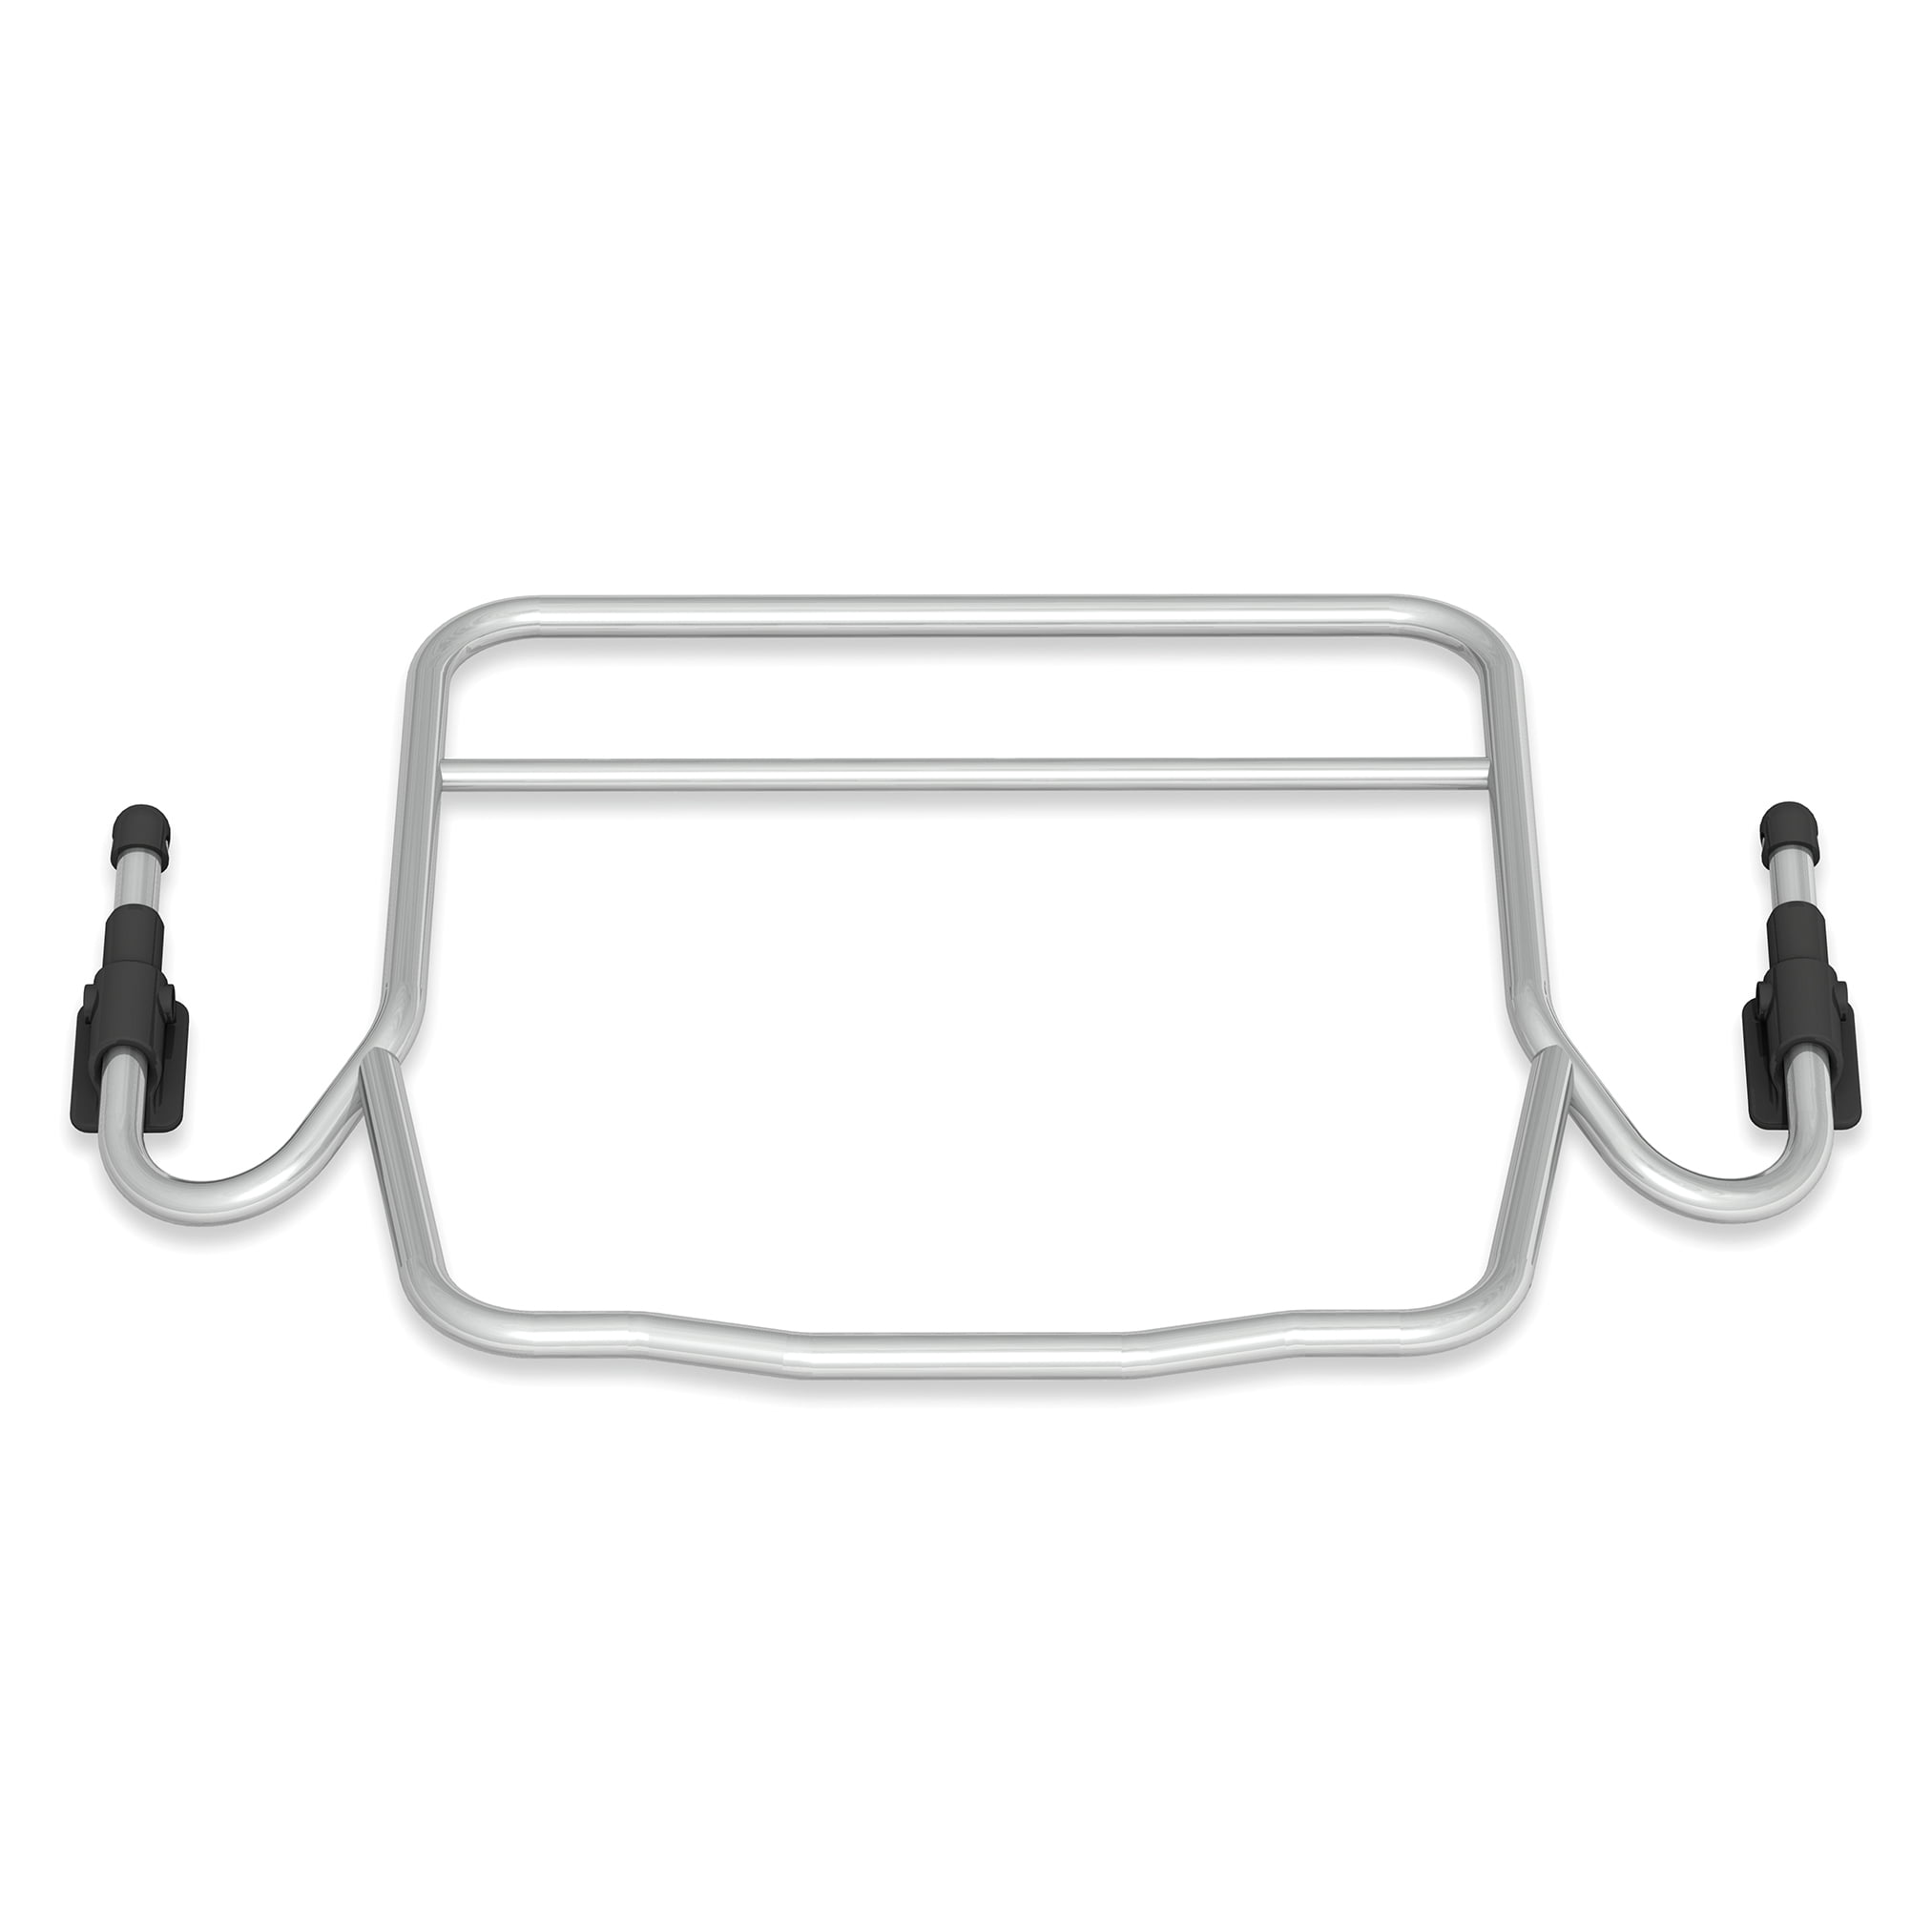 bob stroller accessory adapter